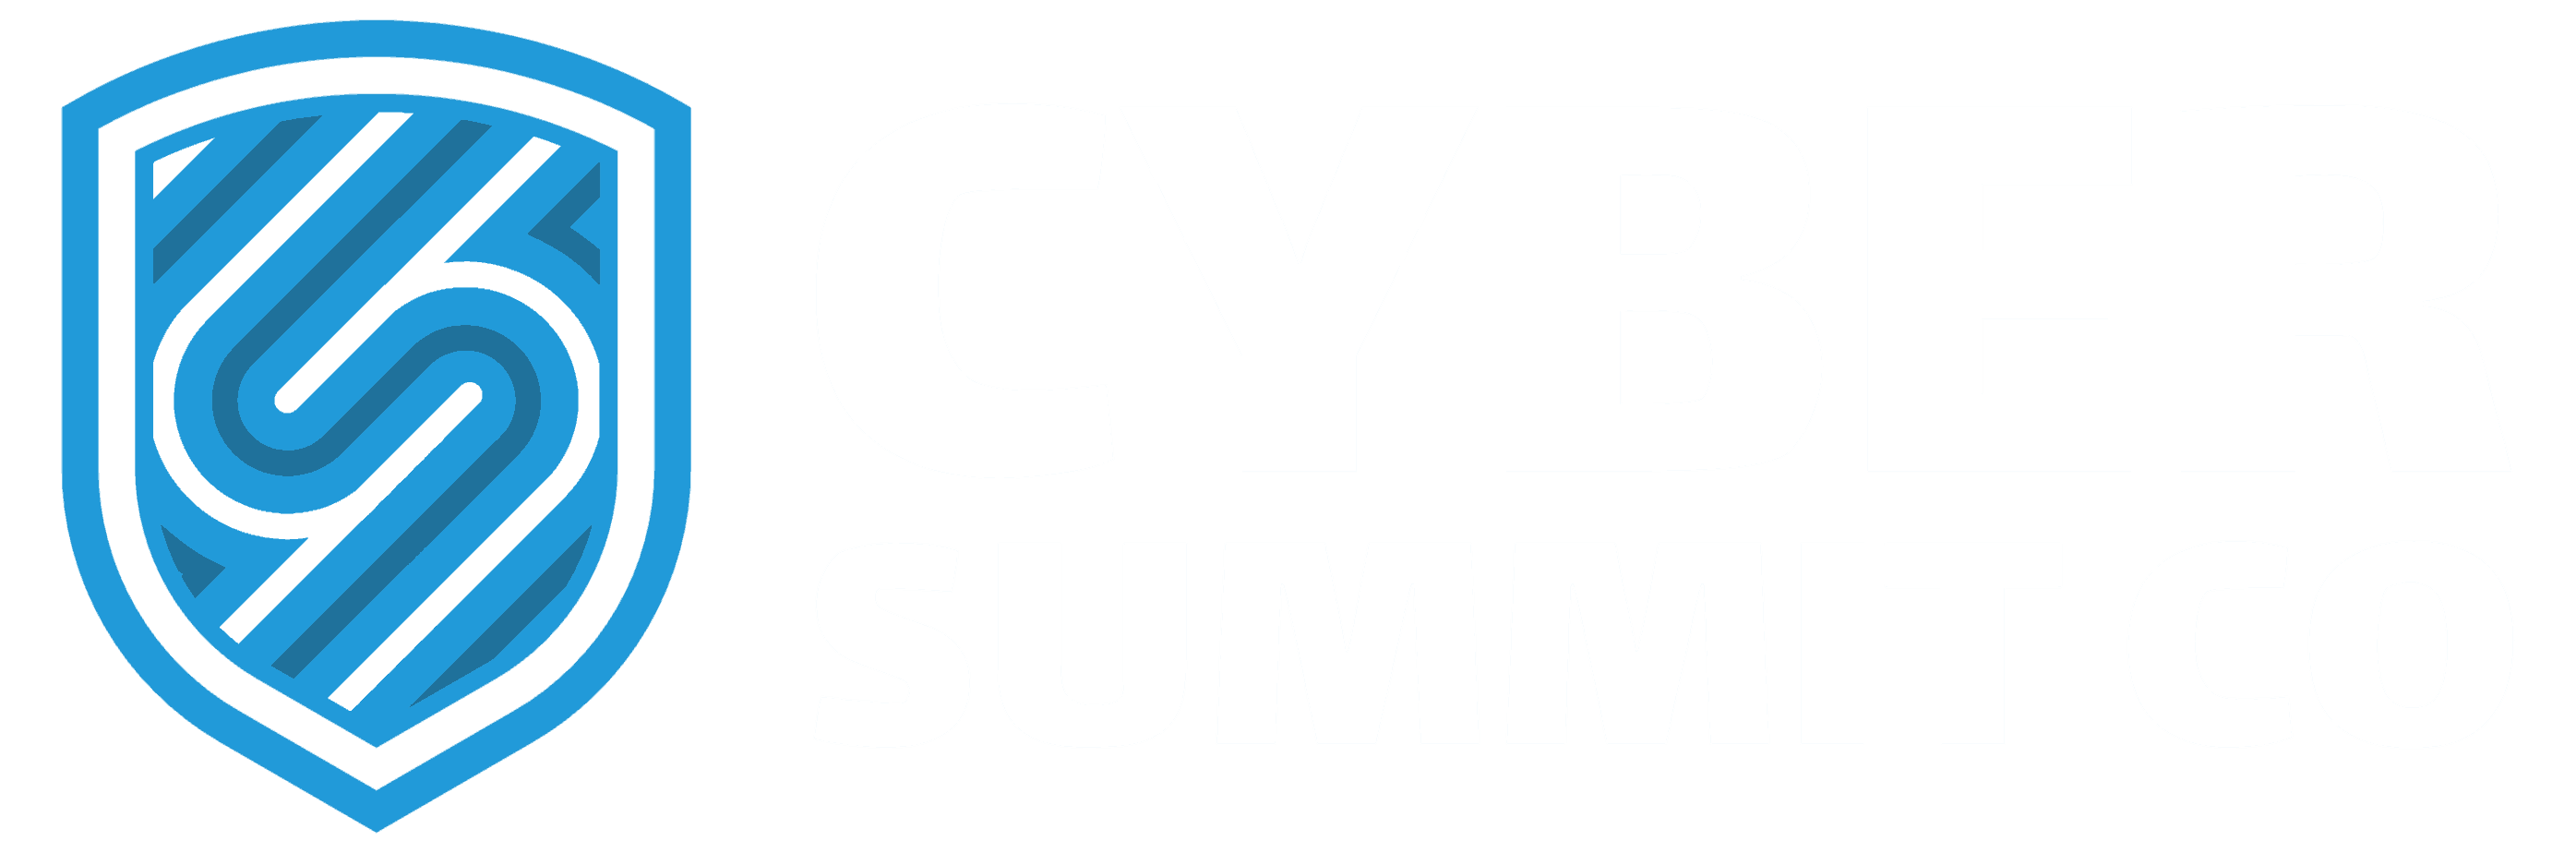 Cyber Summit Co white logo